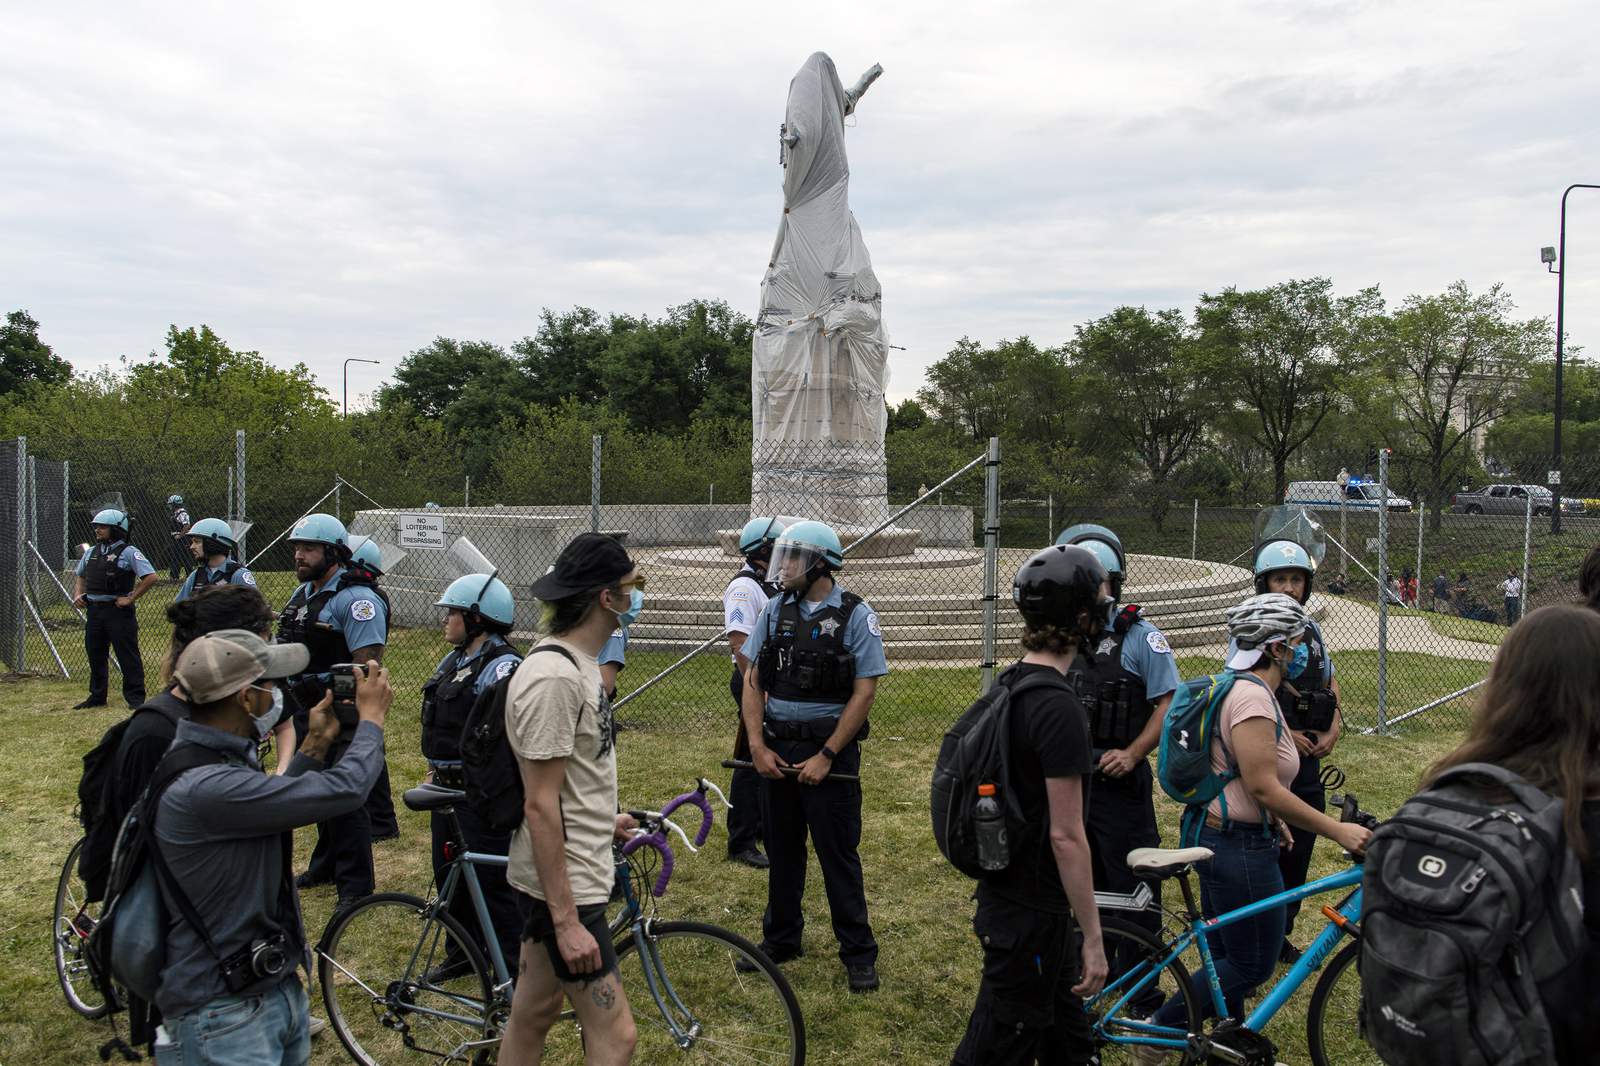 Christopher Columbus statue taken down at Chicago park